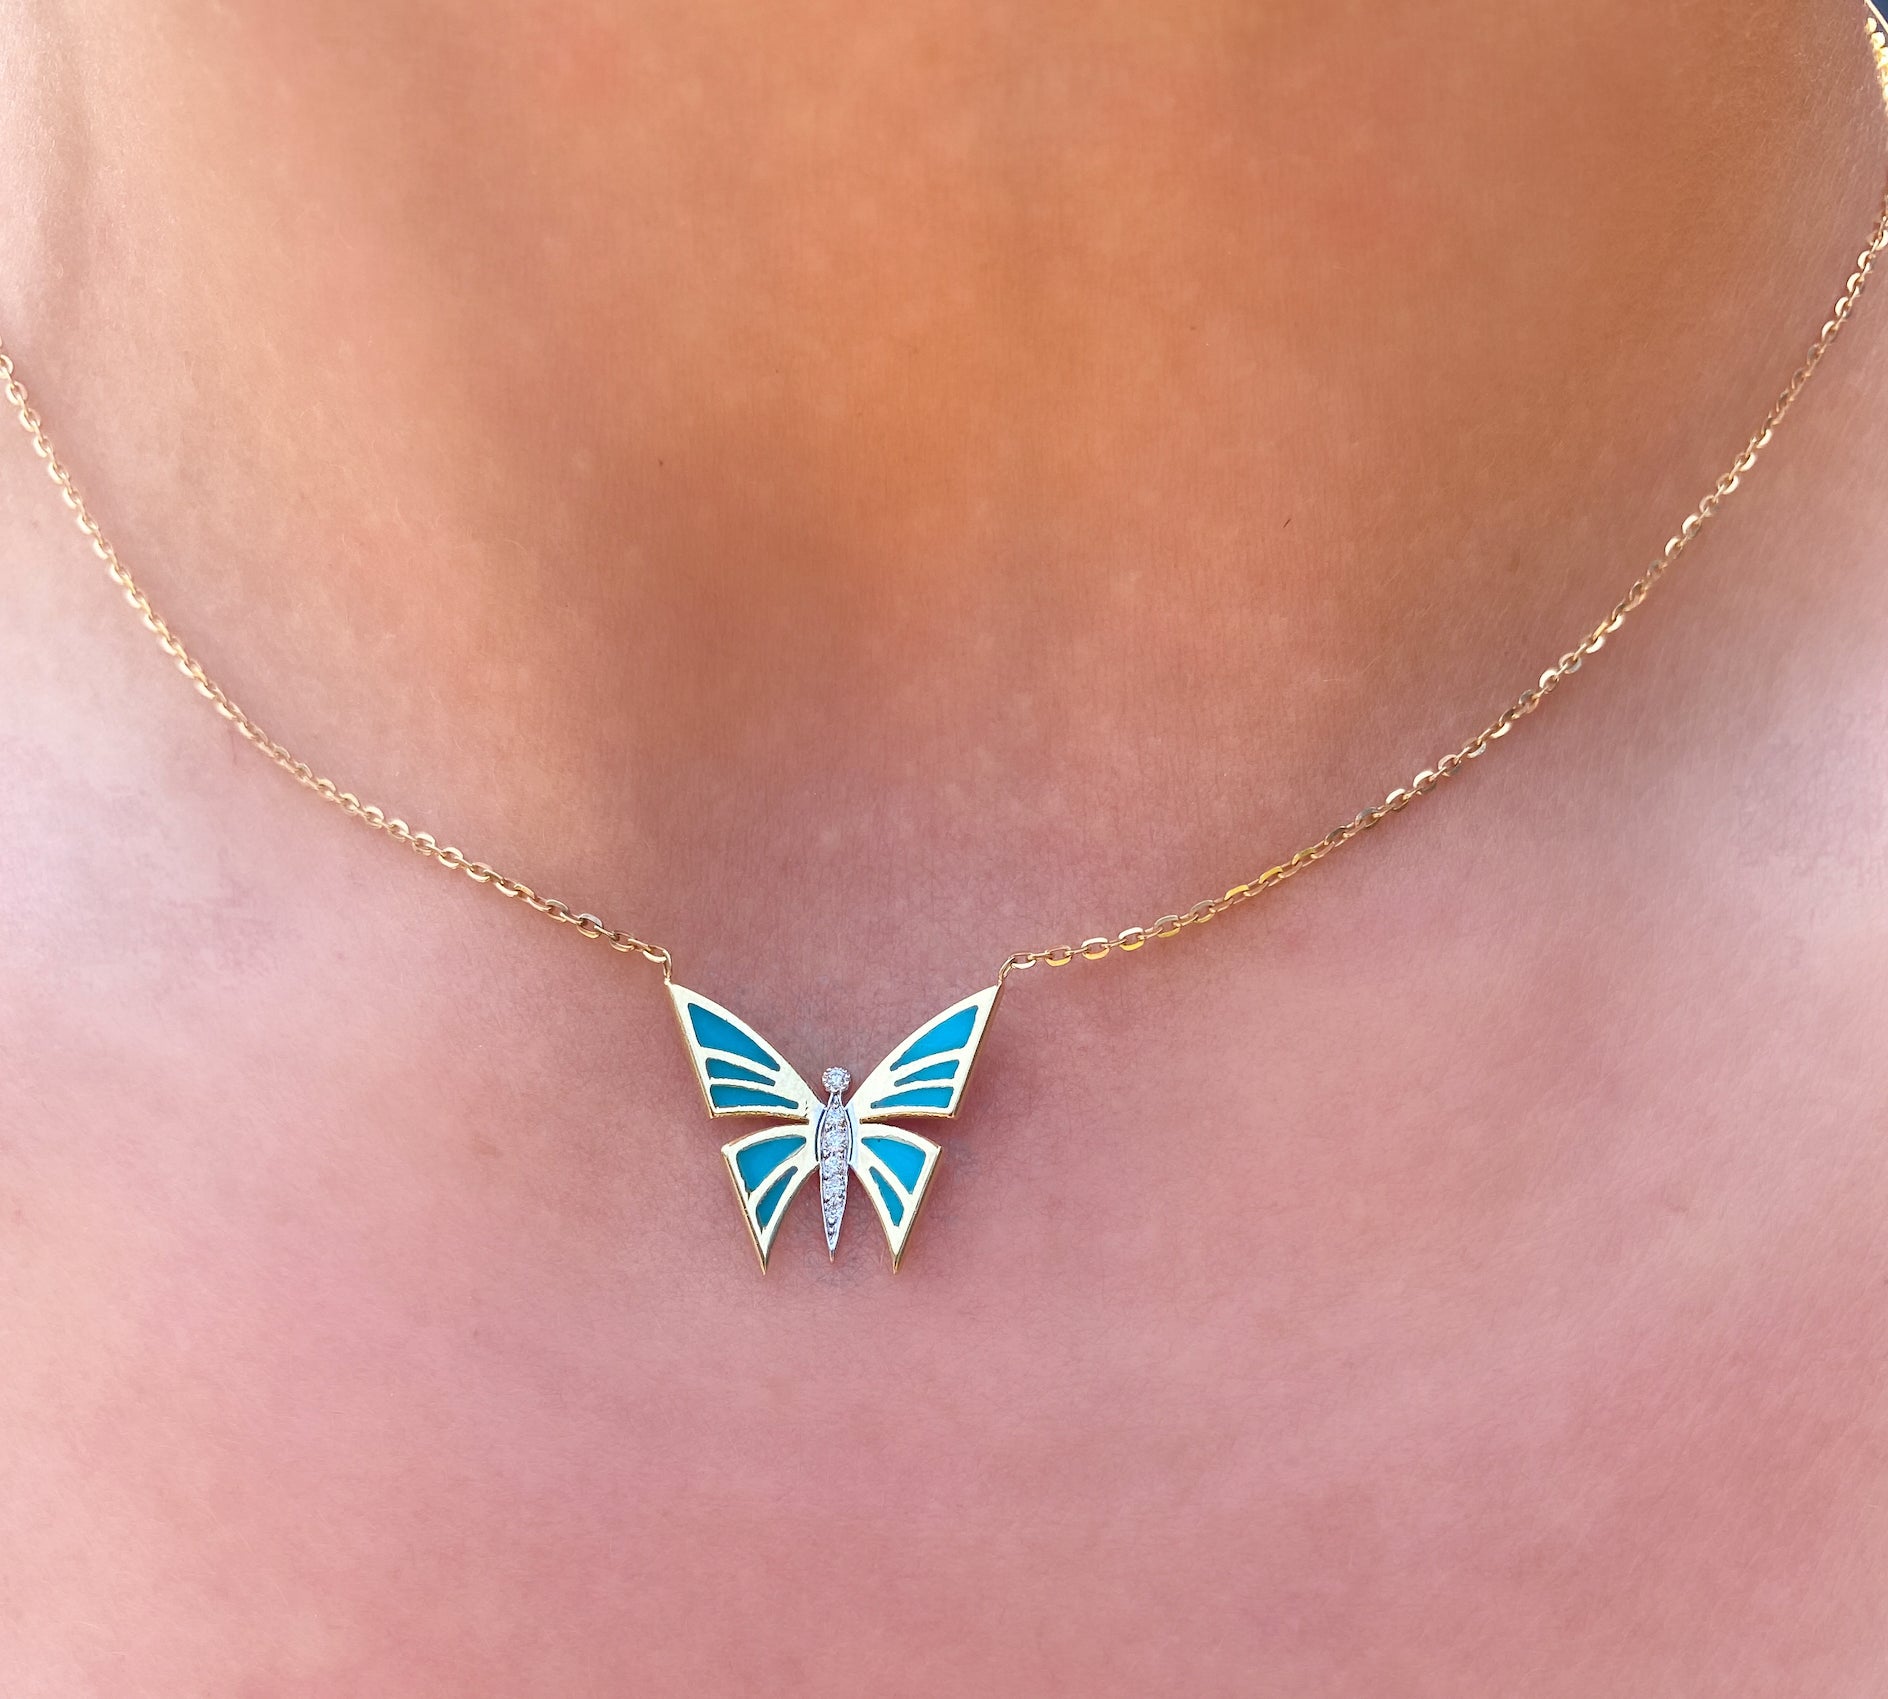 Enamel Butterfly Necklace Pendant Falamank   